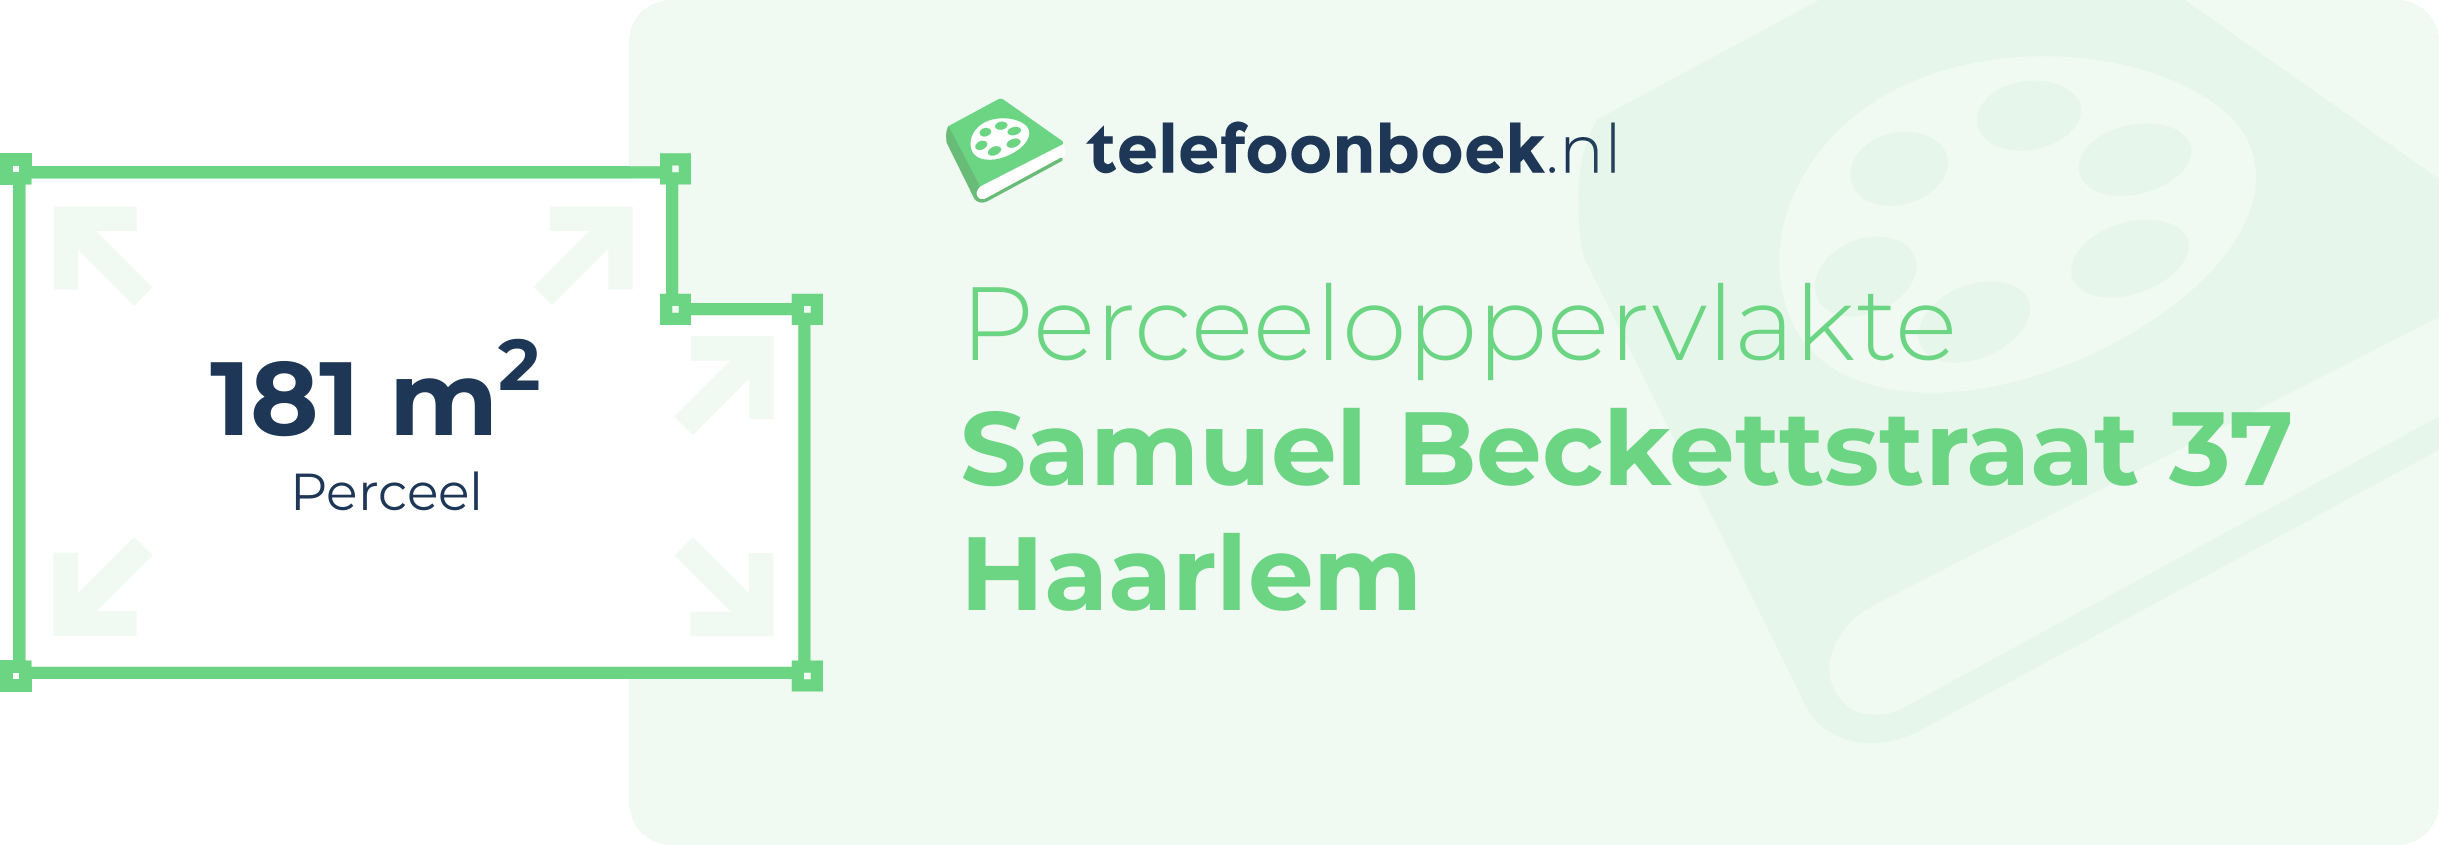 Perceeloppervlakte Samuel Beckettstraat 37 Haarlem